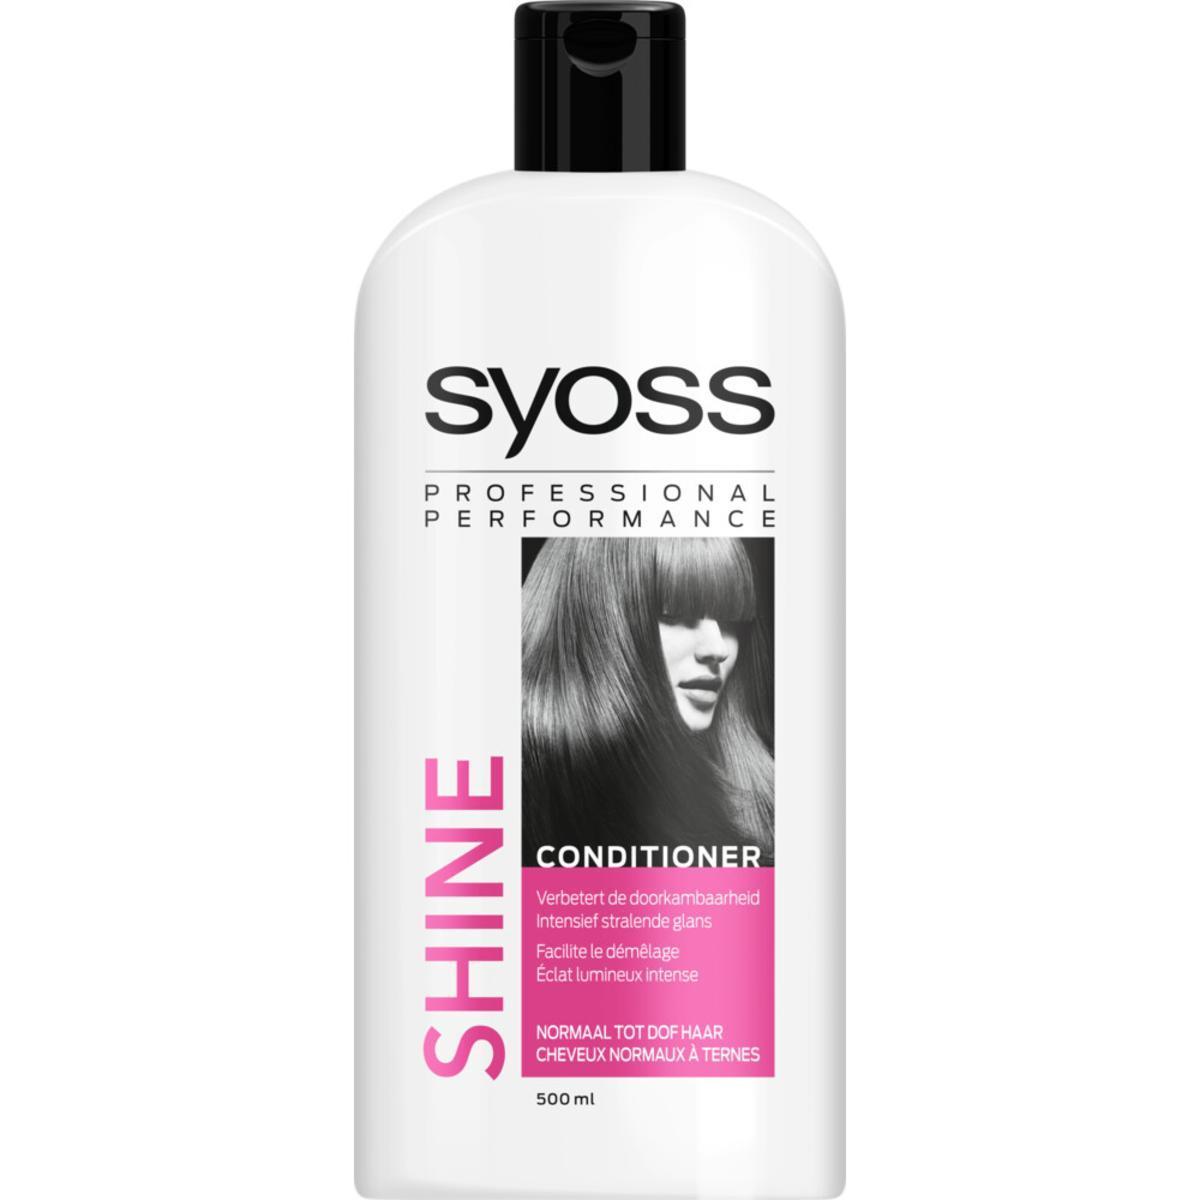 Apres shampoing Syoss 500 ml brillance